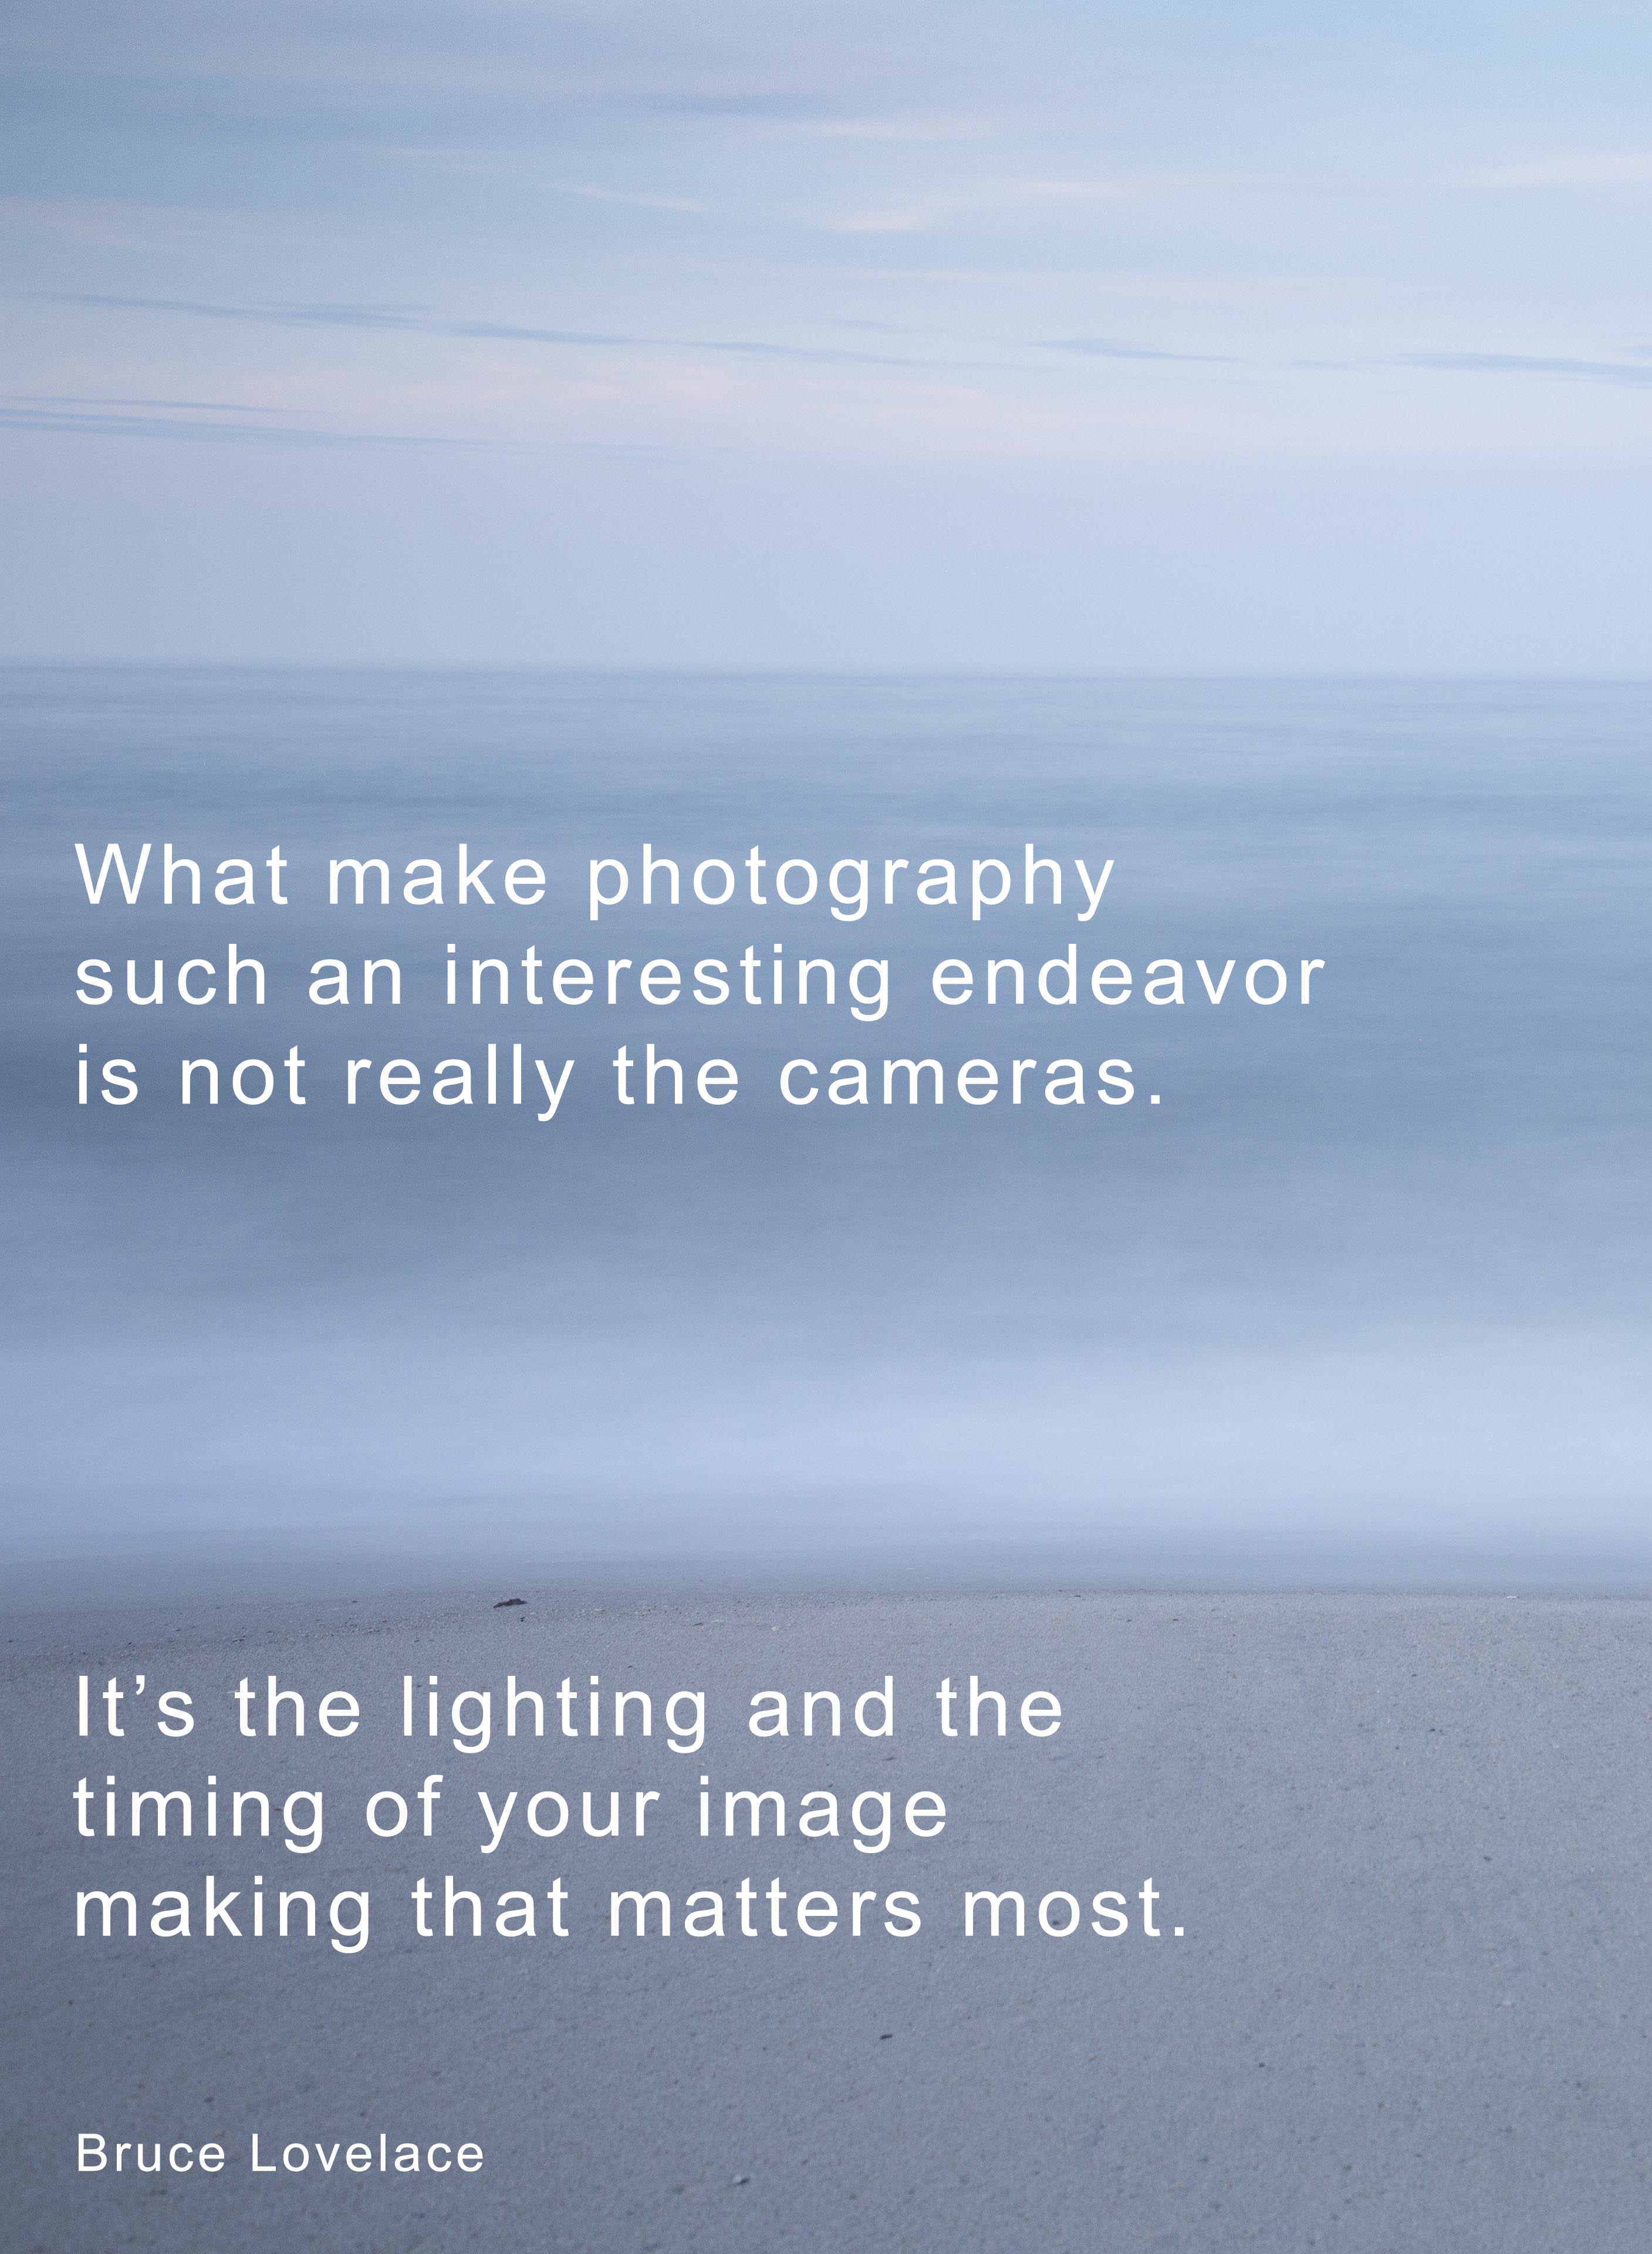 Bruce Lovelace photographer quote